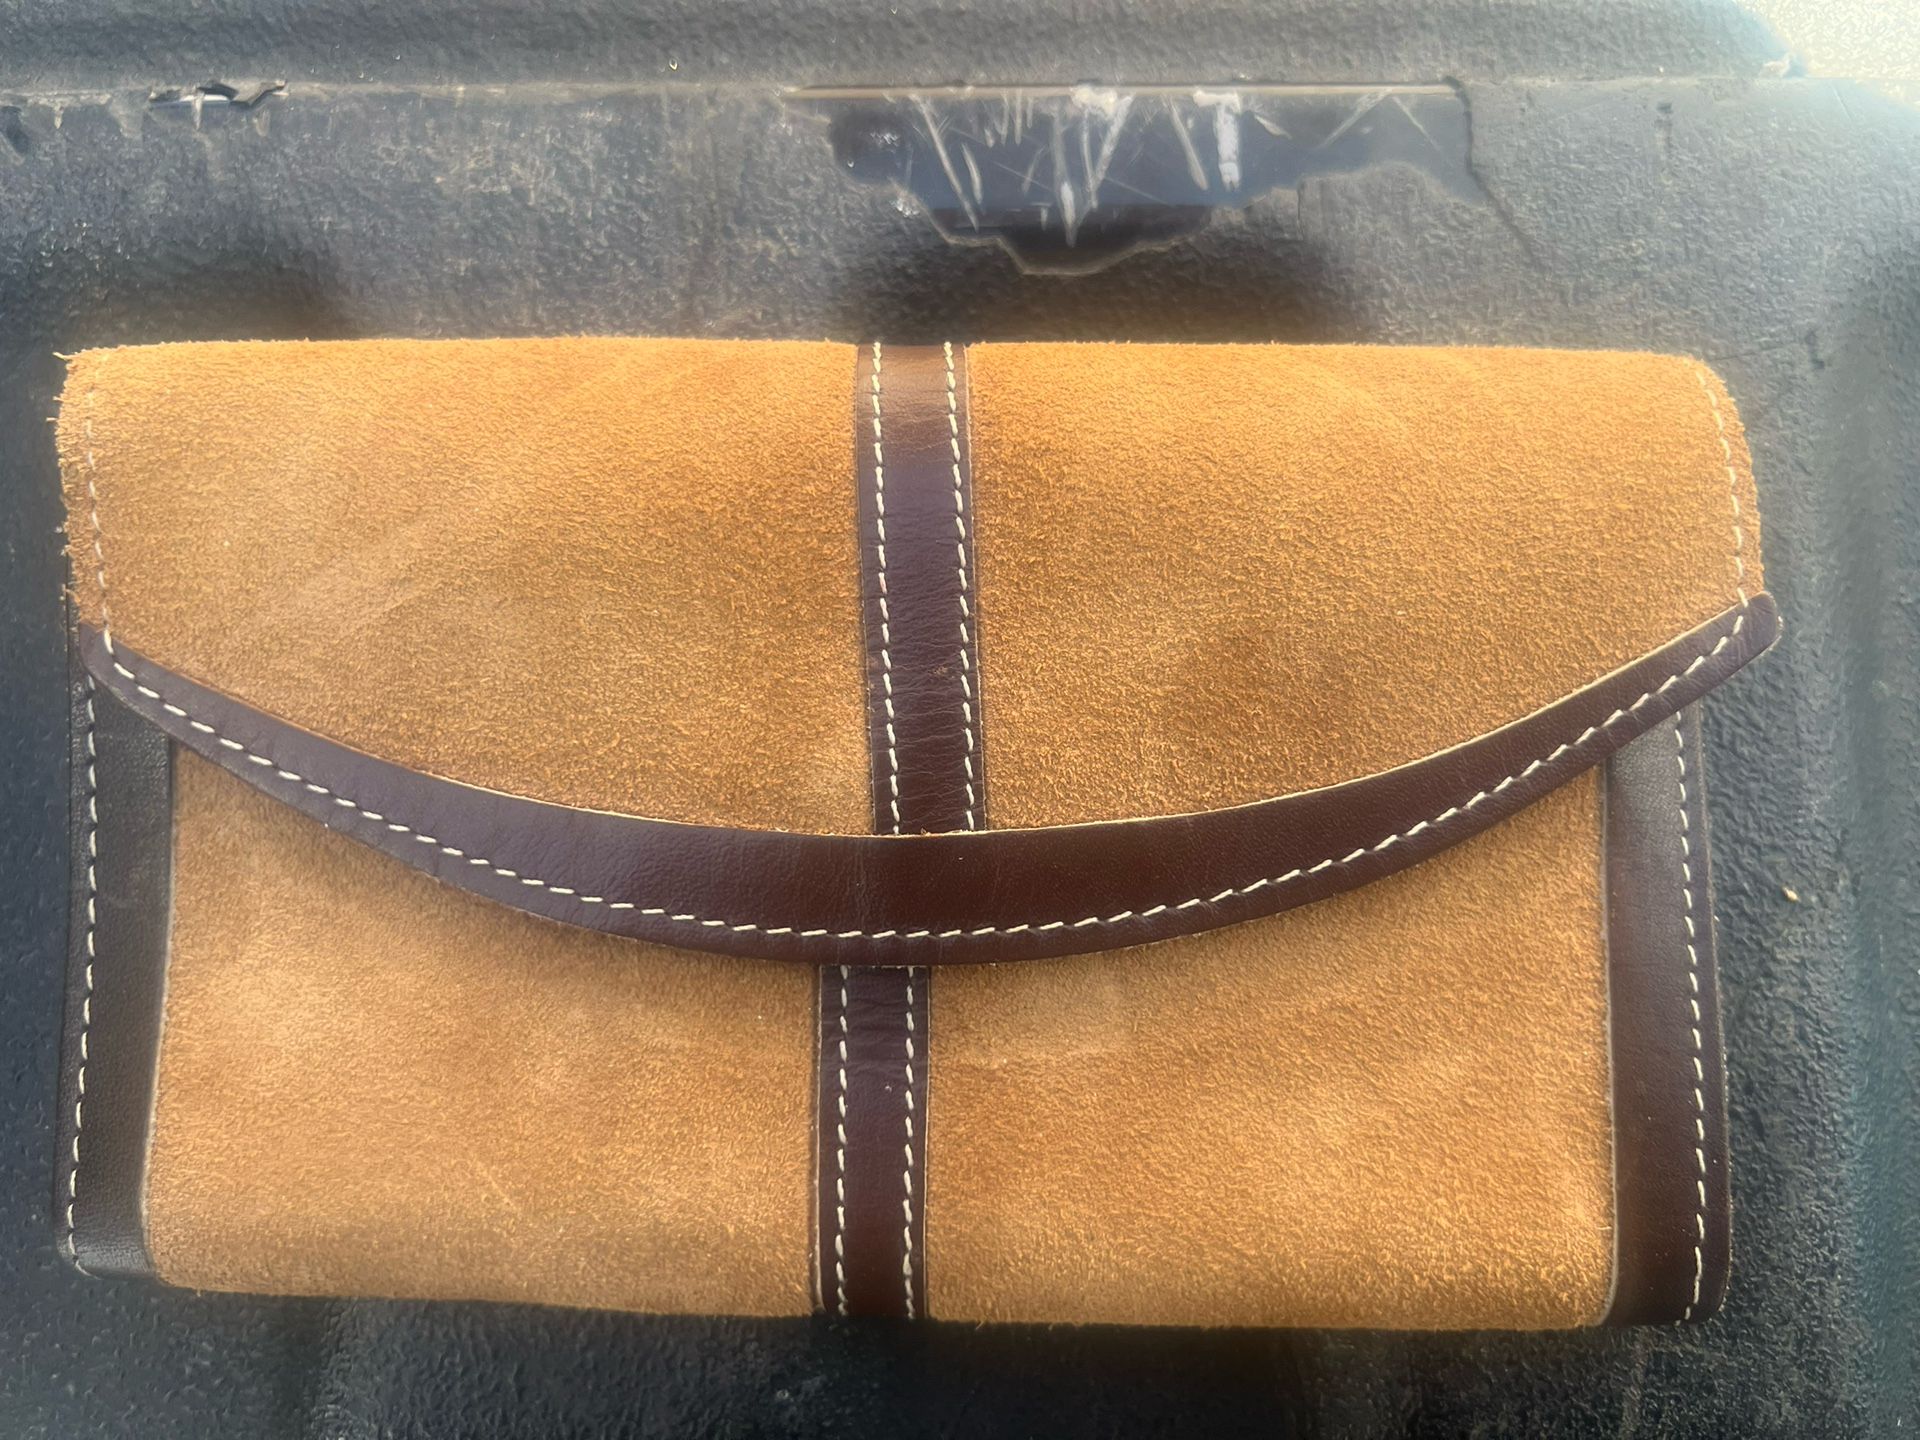 VINTAGE- Leather Suede Wallet BROWN Made In BRASIL - Checkbook Credit Card Slots